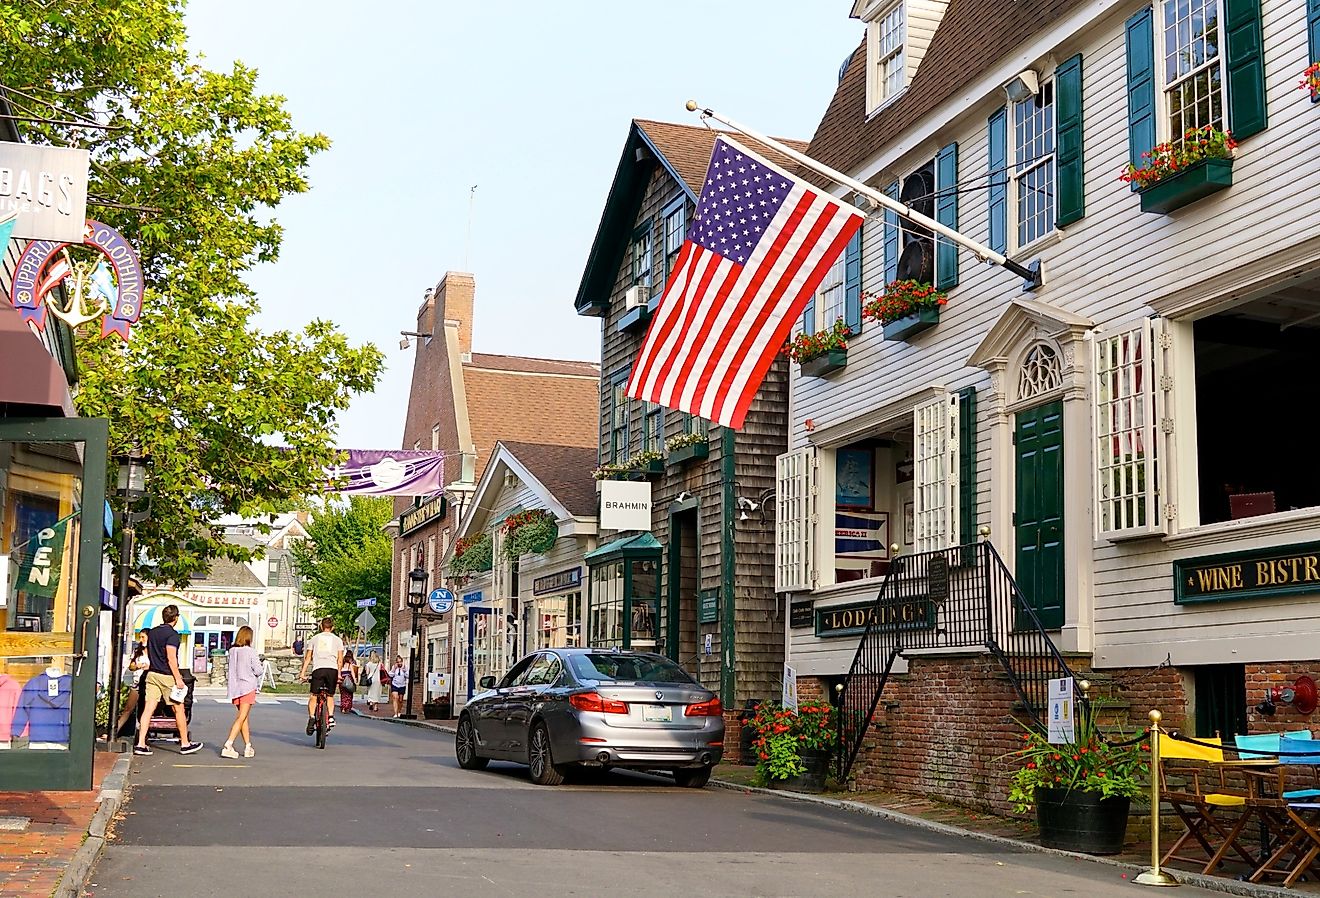 Newport, Rhode Island's famed Thames Street shopping district. Image credit George Wirt via Shutterstock